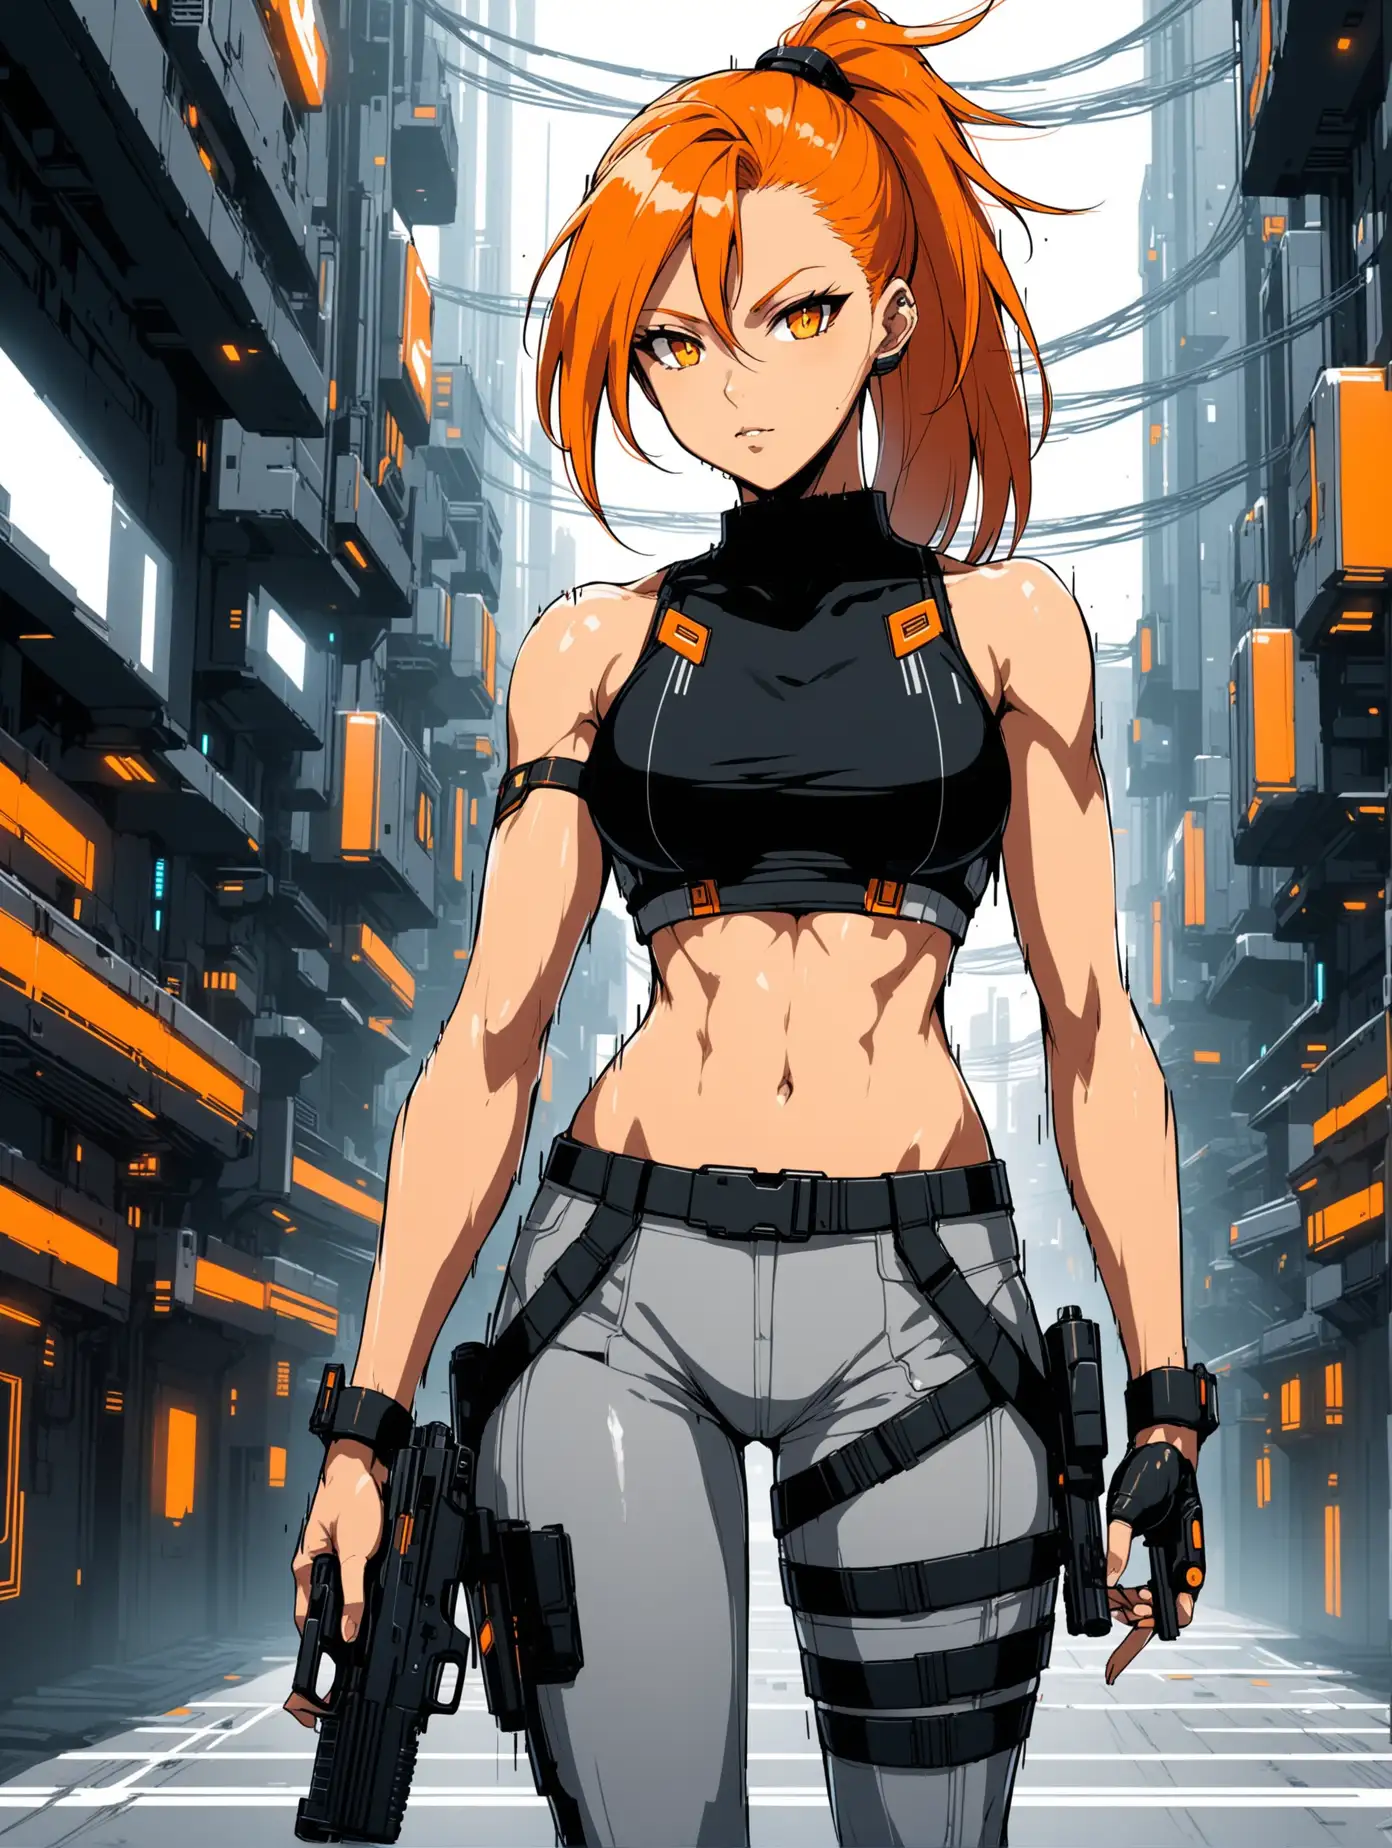 Fierce Anime Cyberpunk Heroine with Handguns in Futuristic Urban Setting